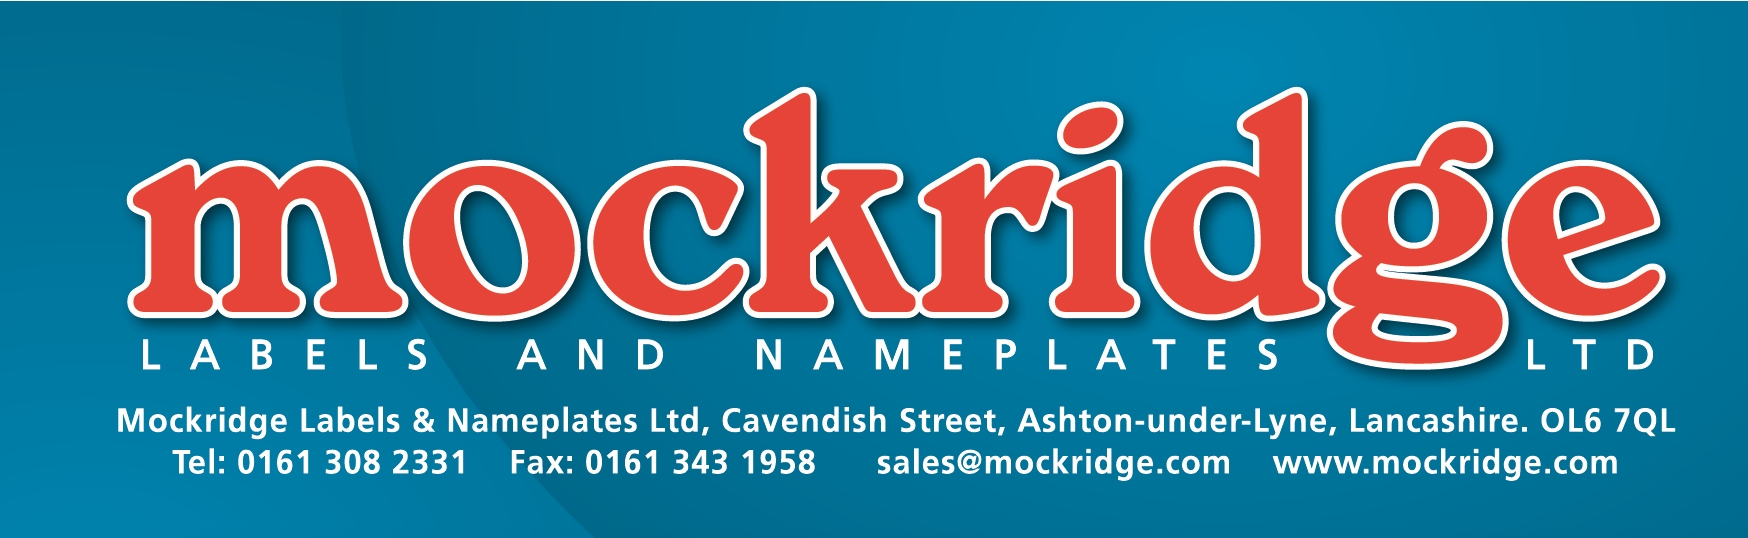 Mockridge Labels & Nameplates Ltd